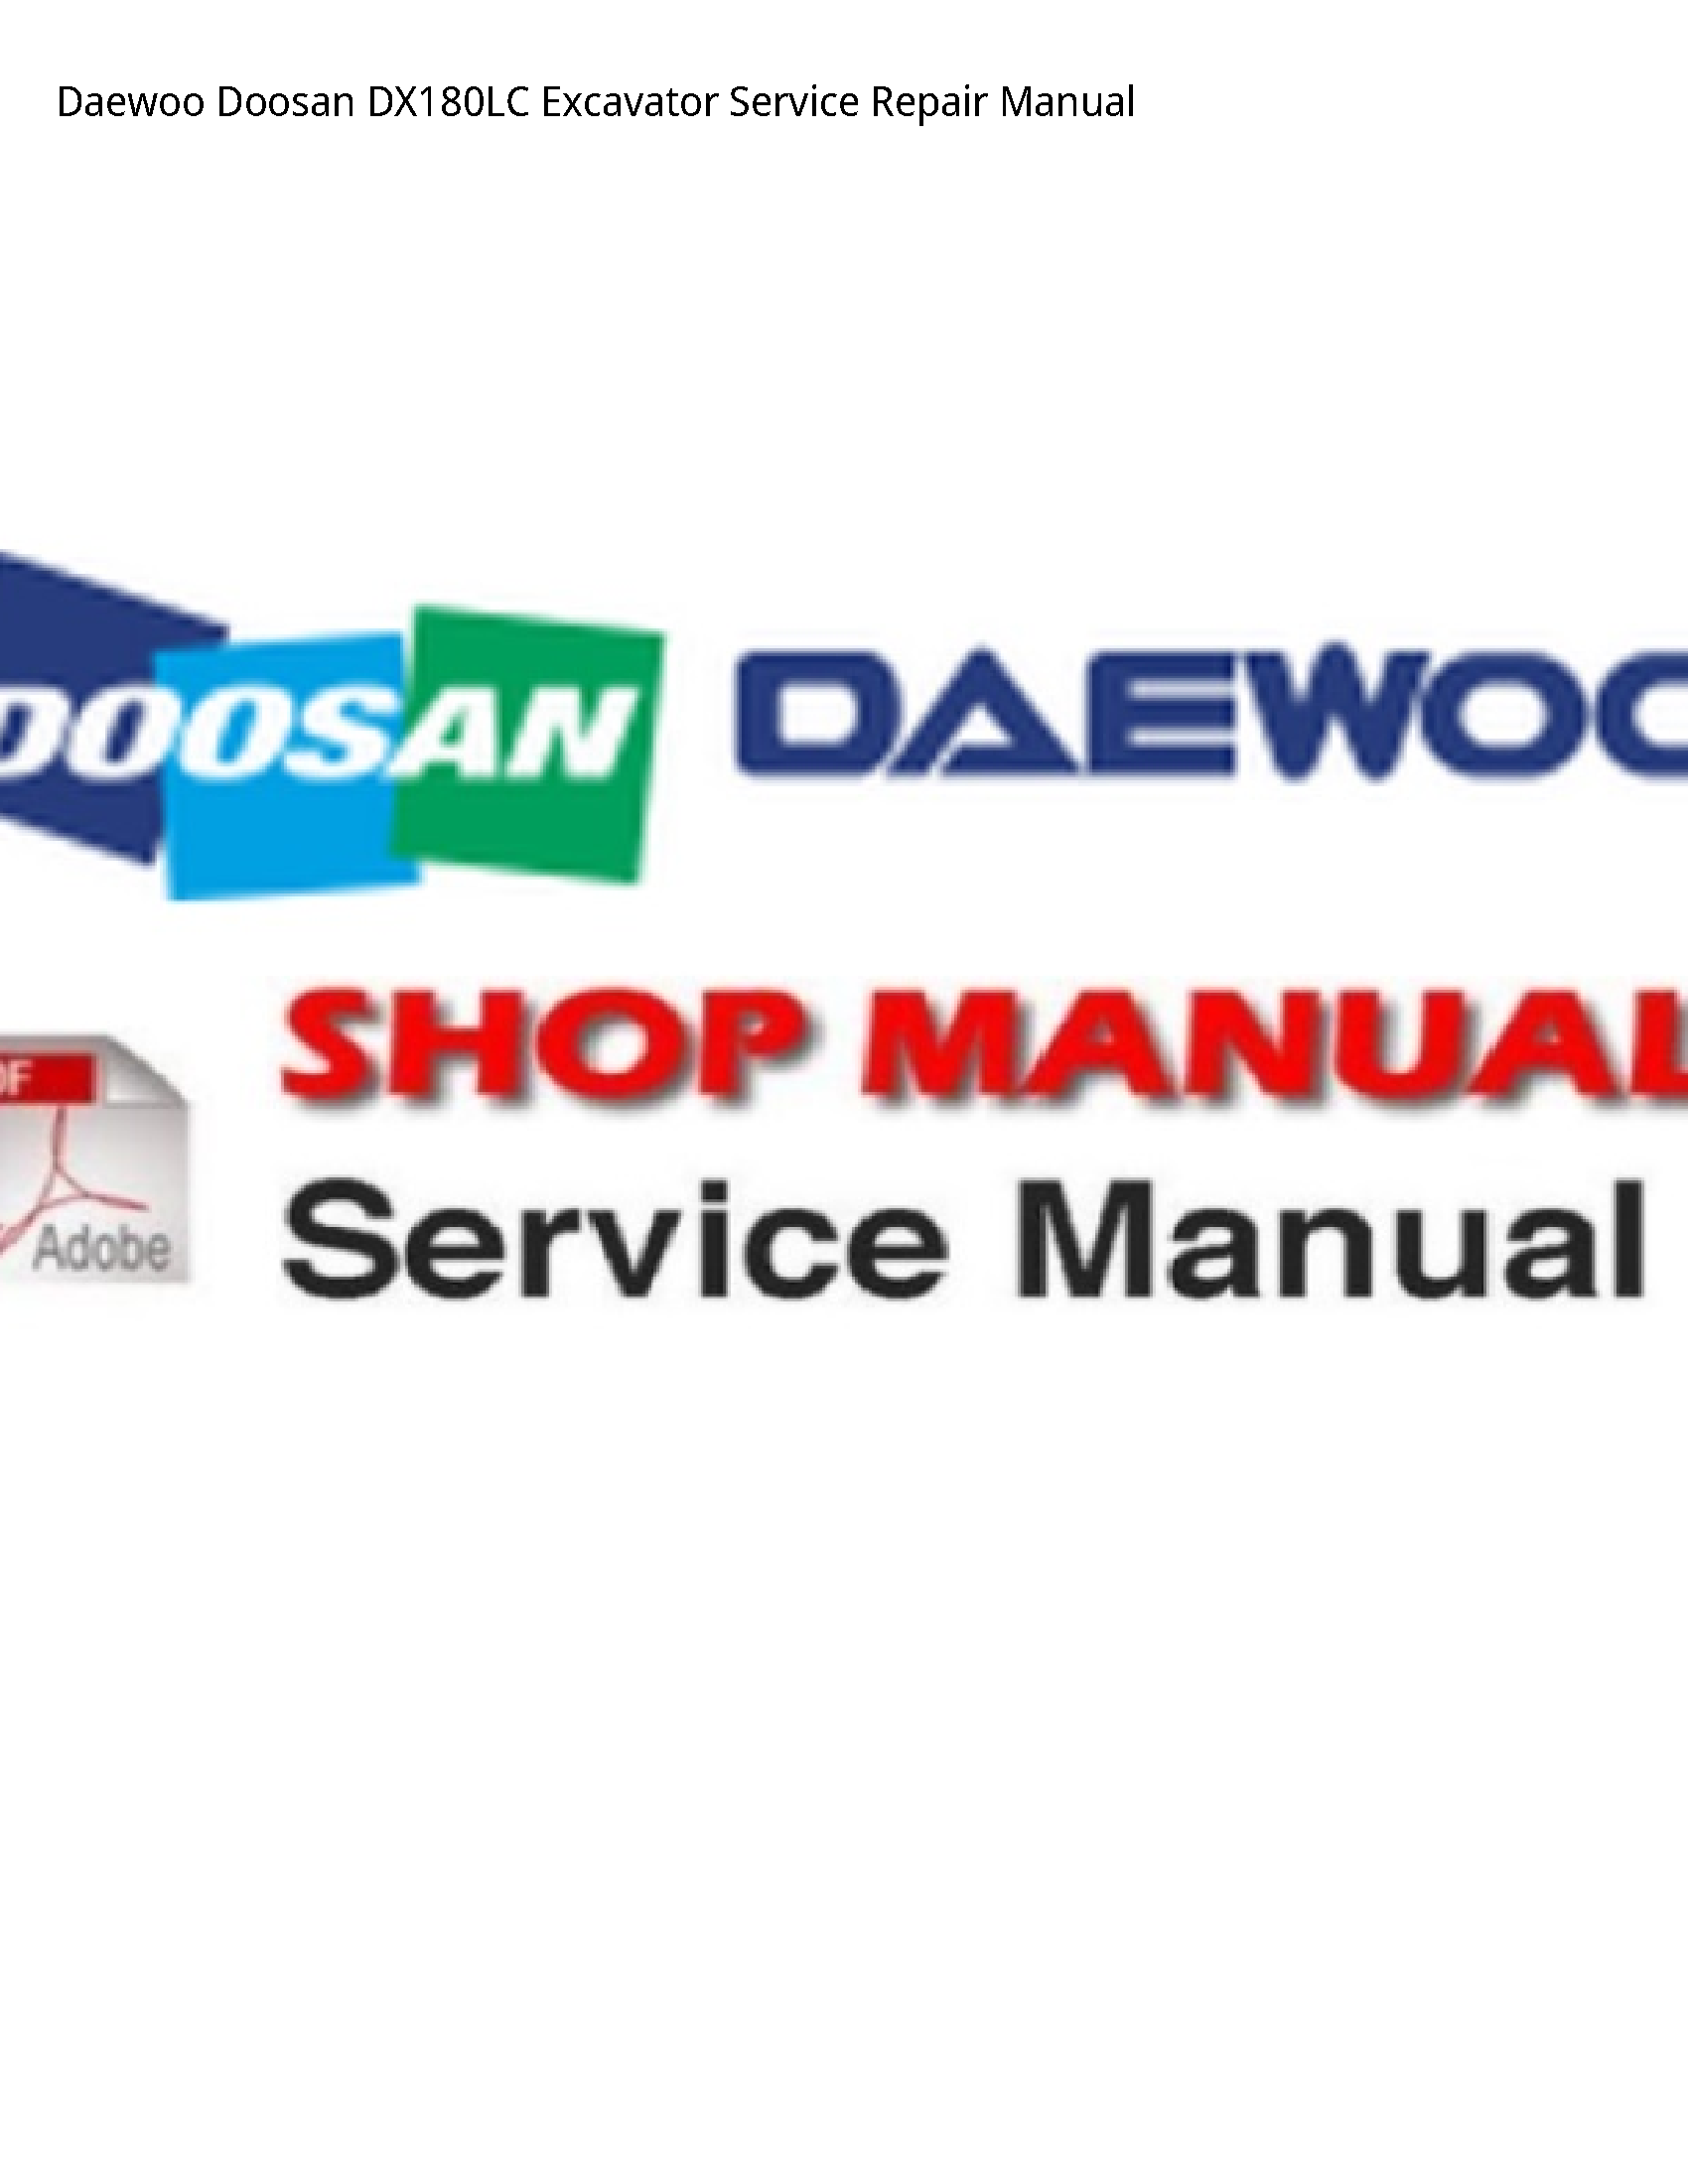 Daewoo Doosan DX180LC Excavator manual